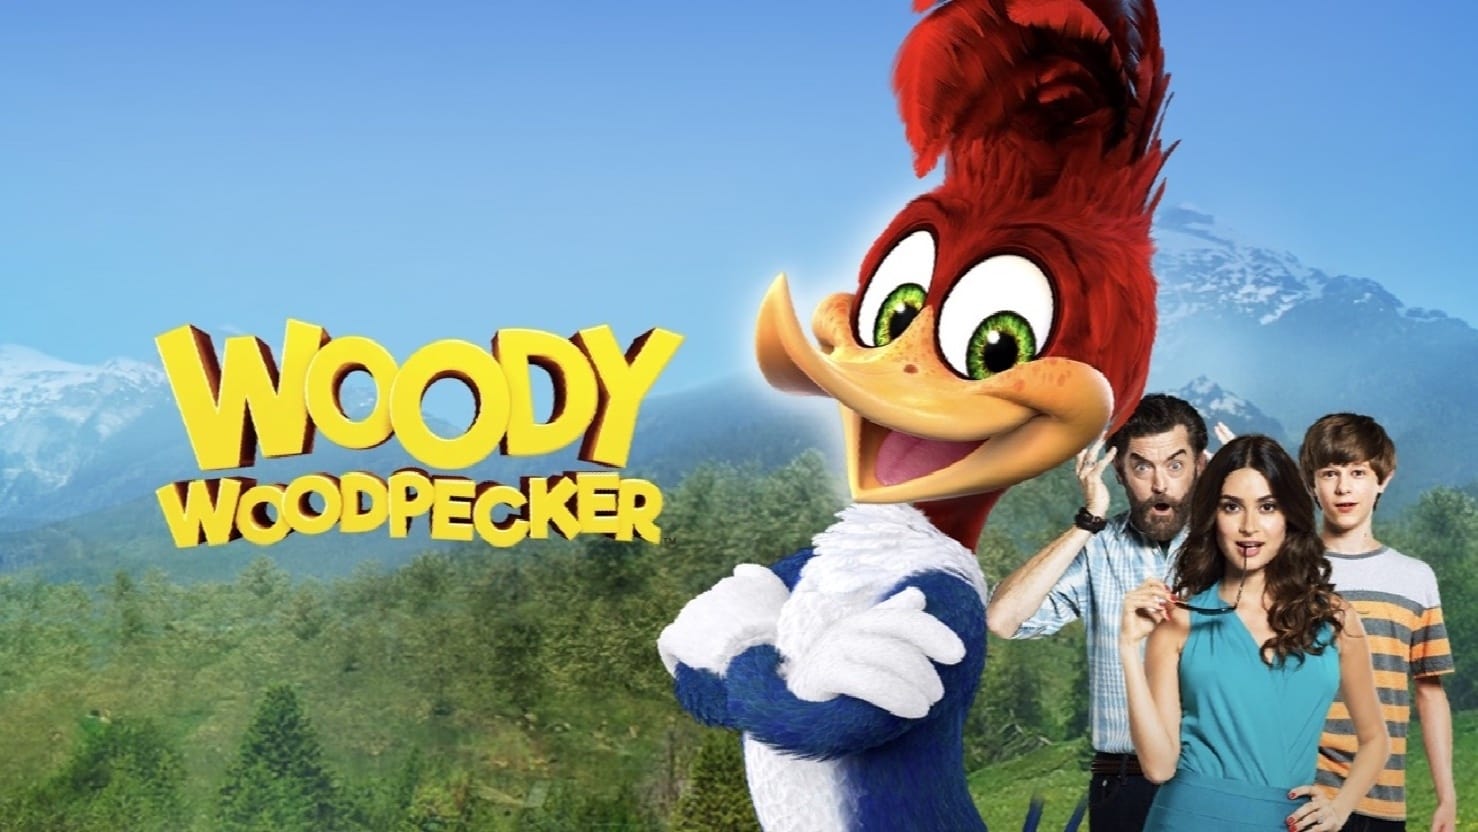 Watch Woody Woodpecker (2017) Full Movie Online Free | Stream Free ...